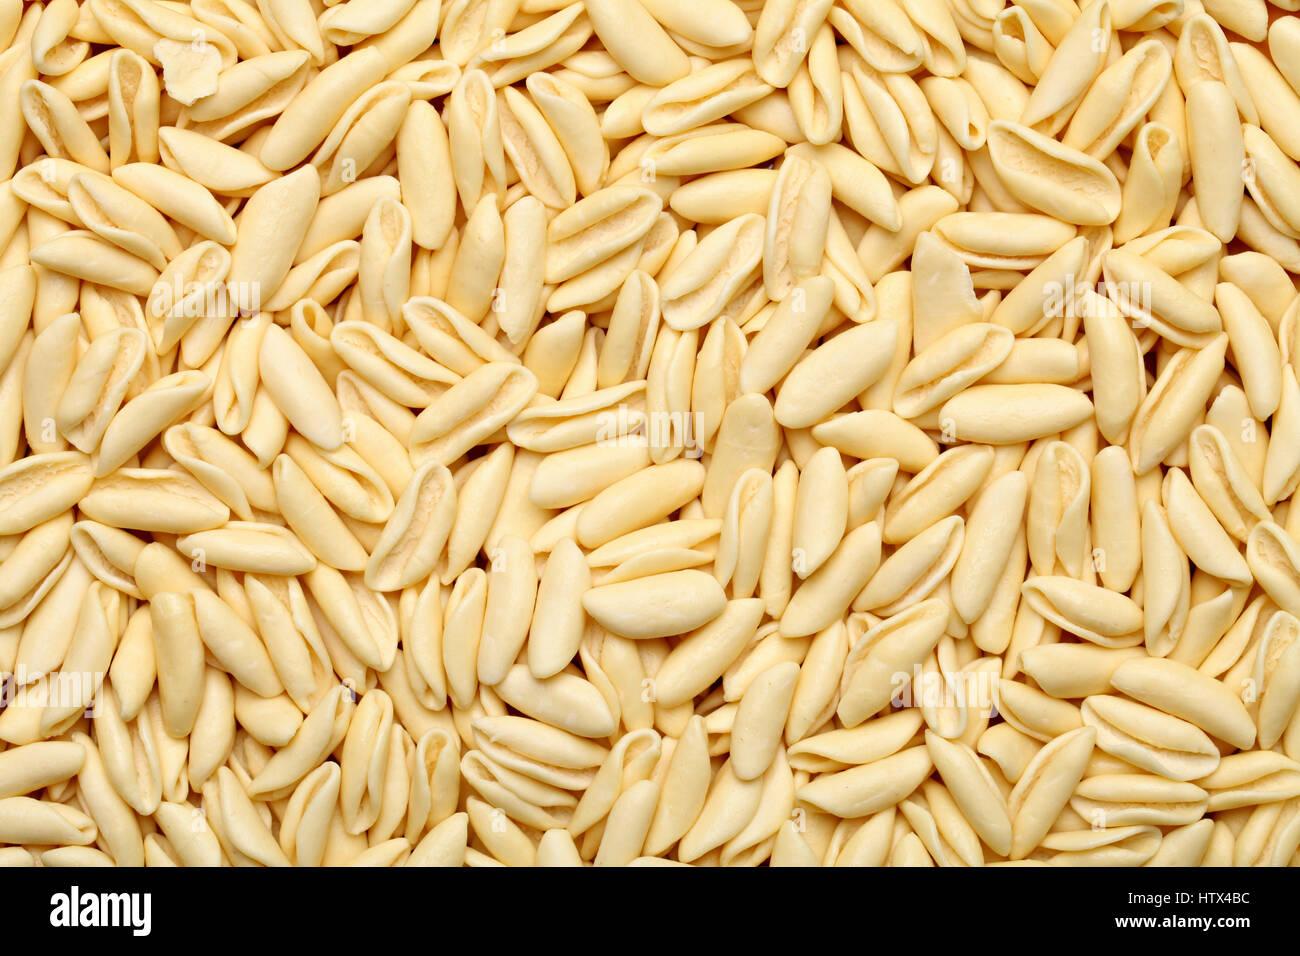 Traditional homemade Italian pasta background image, Stock Photo